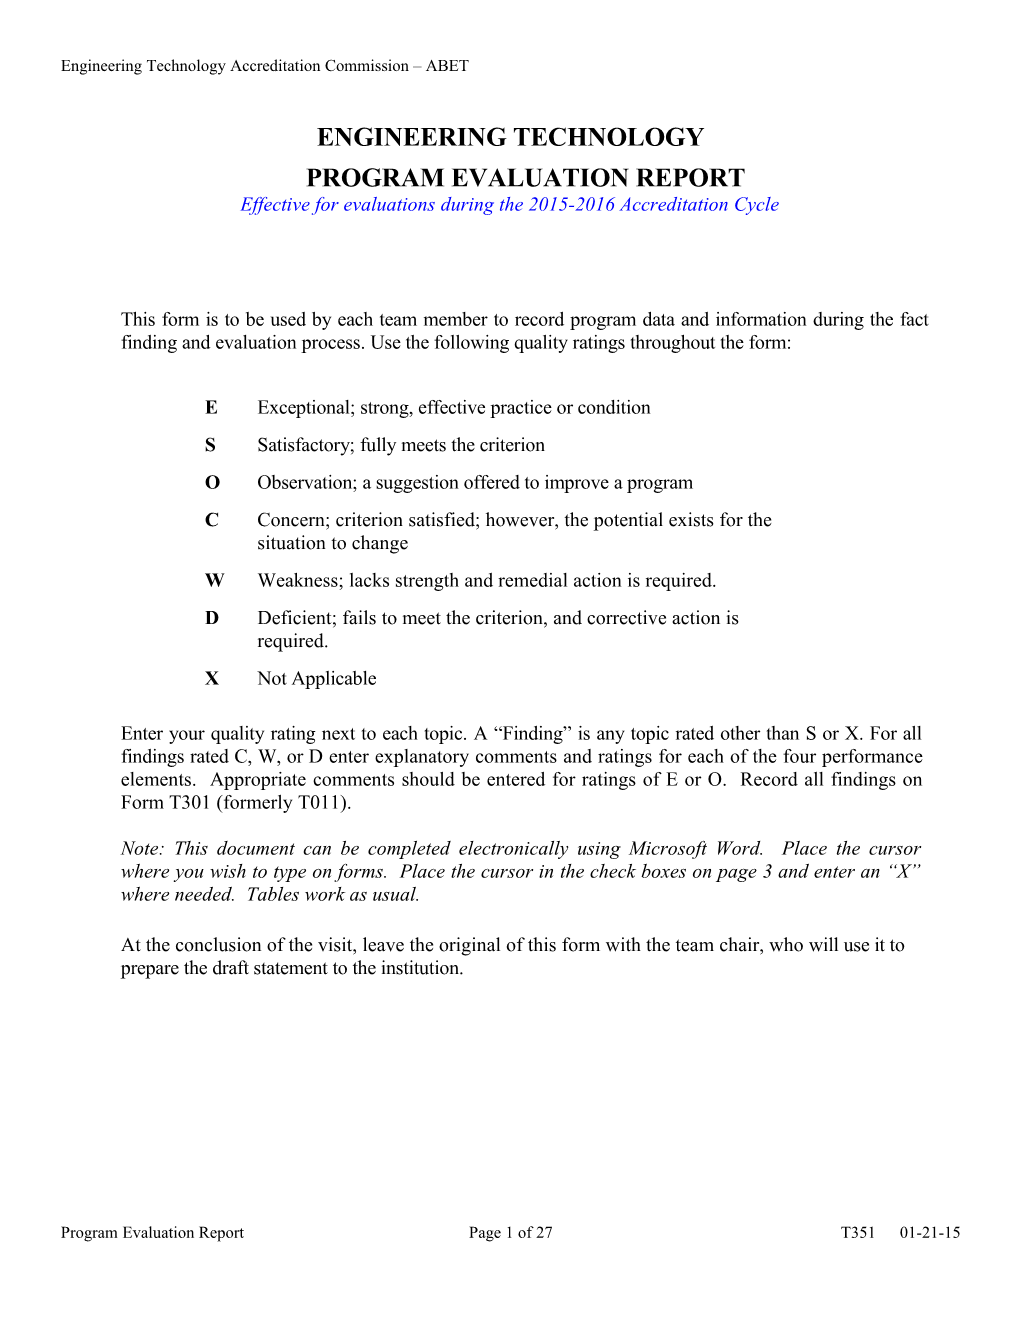 TC4 - Program Evaluation Form